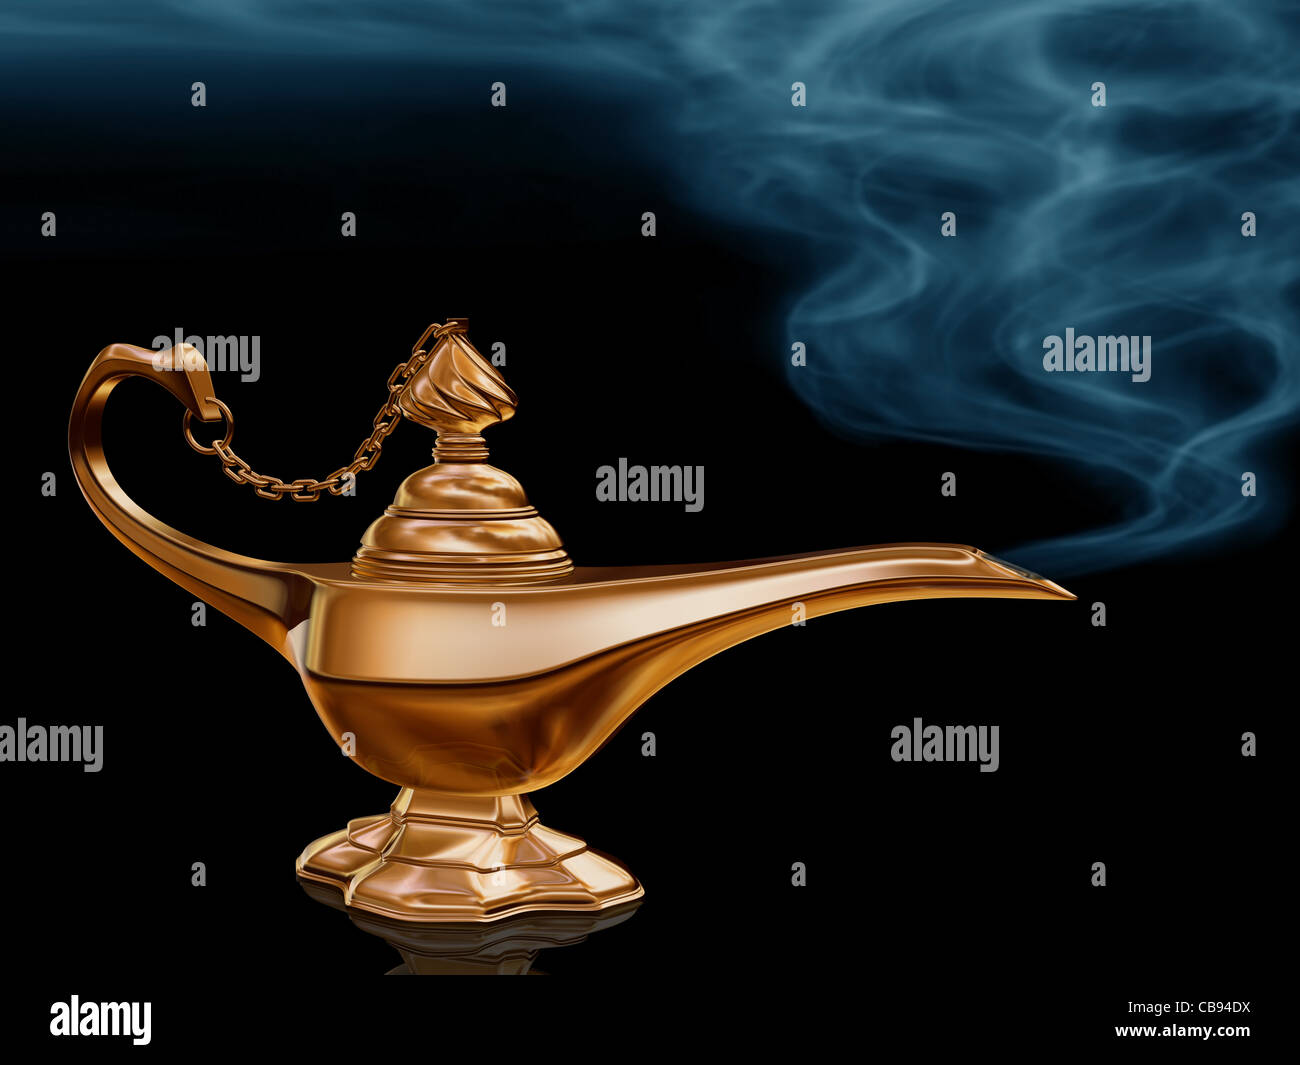 Illustration of the golden magic lamp from Aladdin Stock Photo